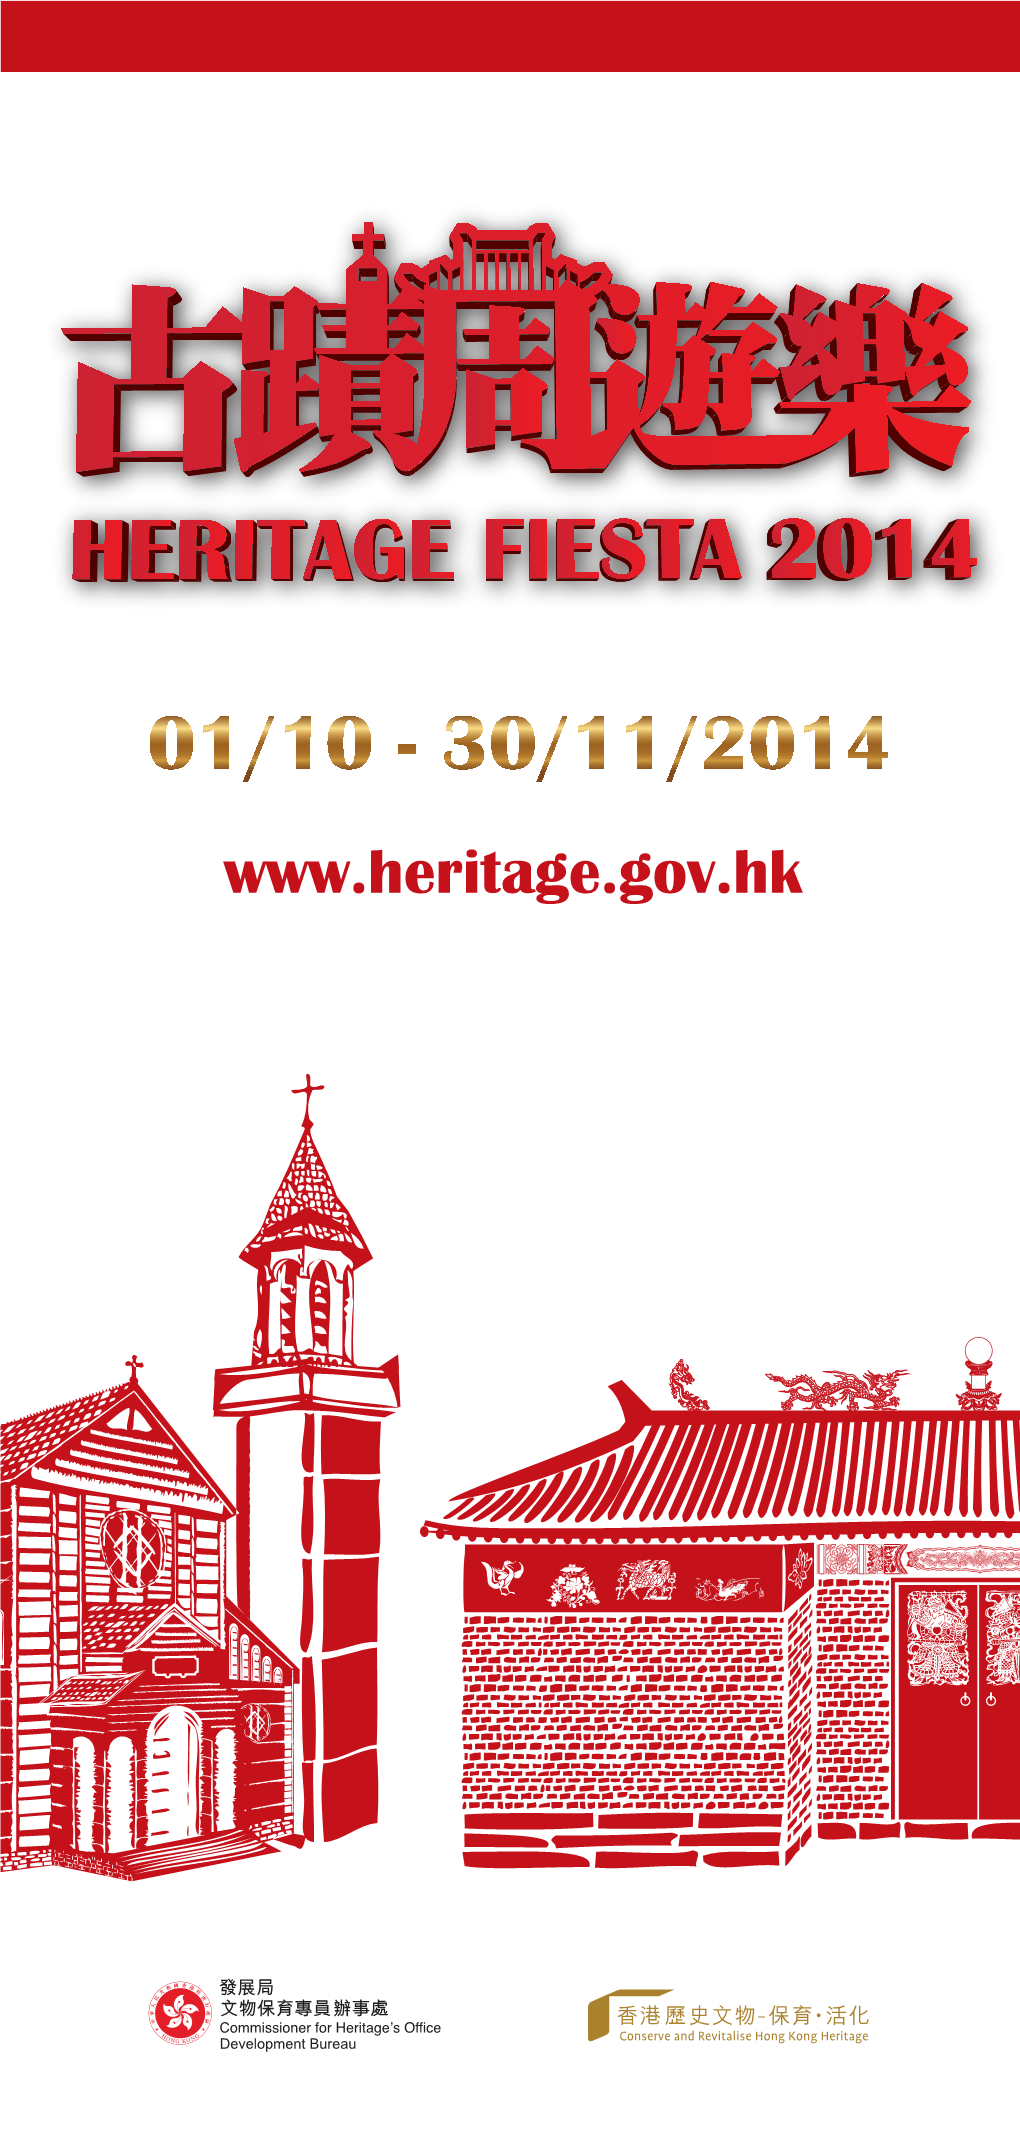 Heritage Fiesta 2014